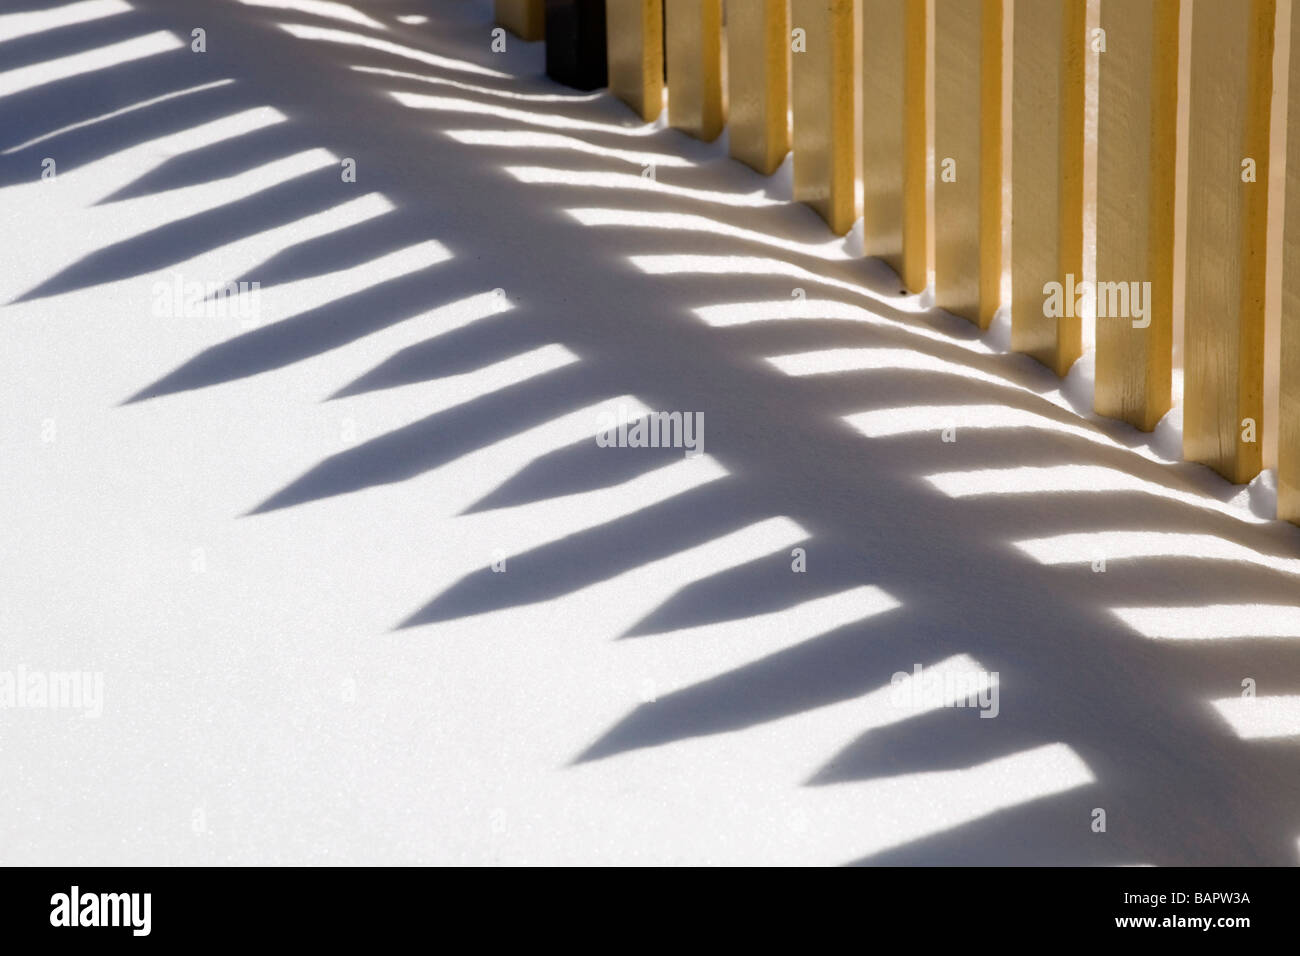 Fence shadows on the snow Stock Photo